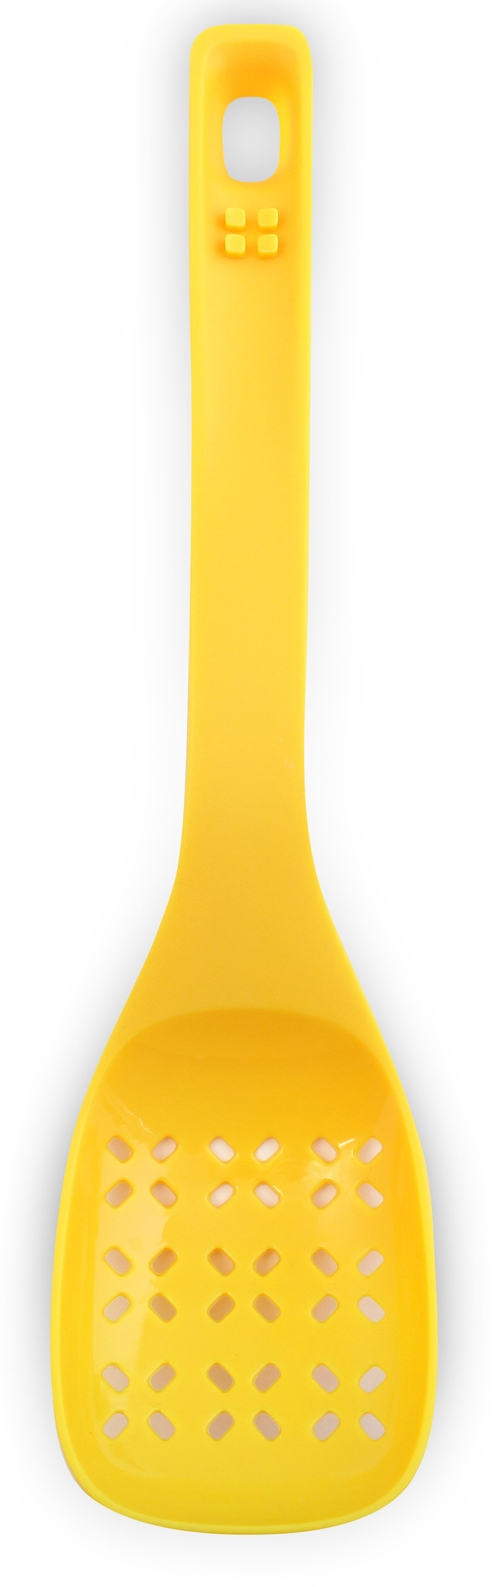 Łyżka cedzakowa Colori żółta Vialli Design